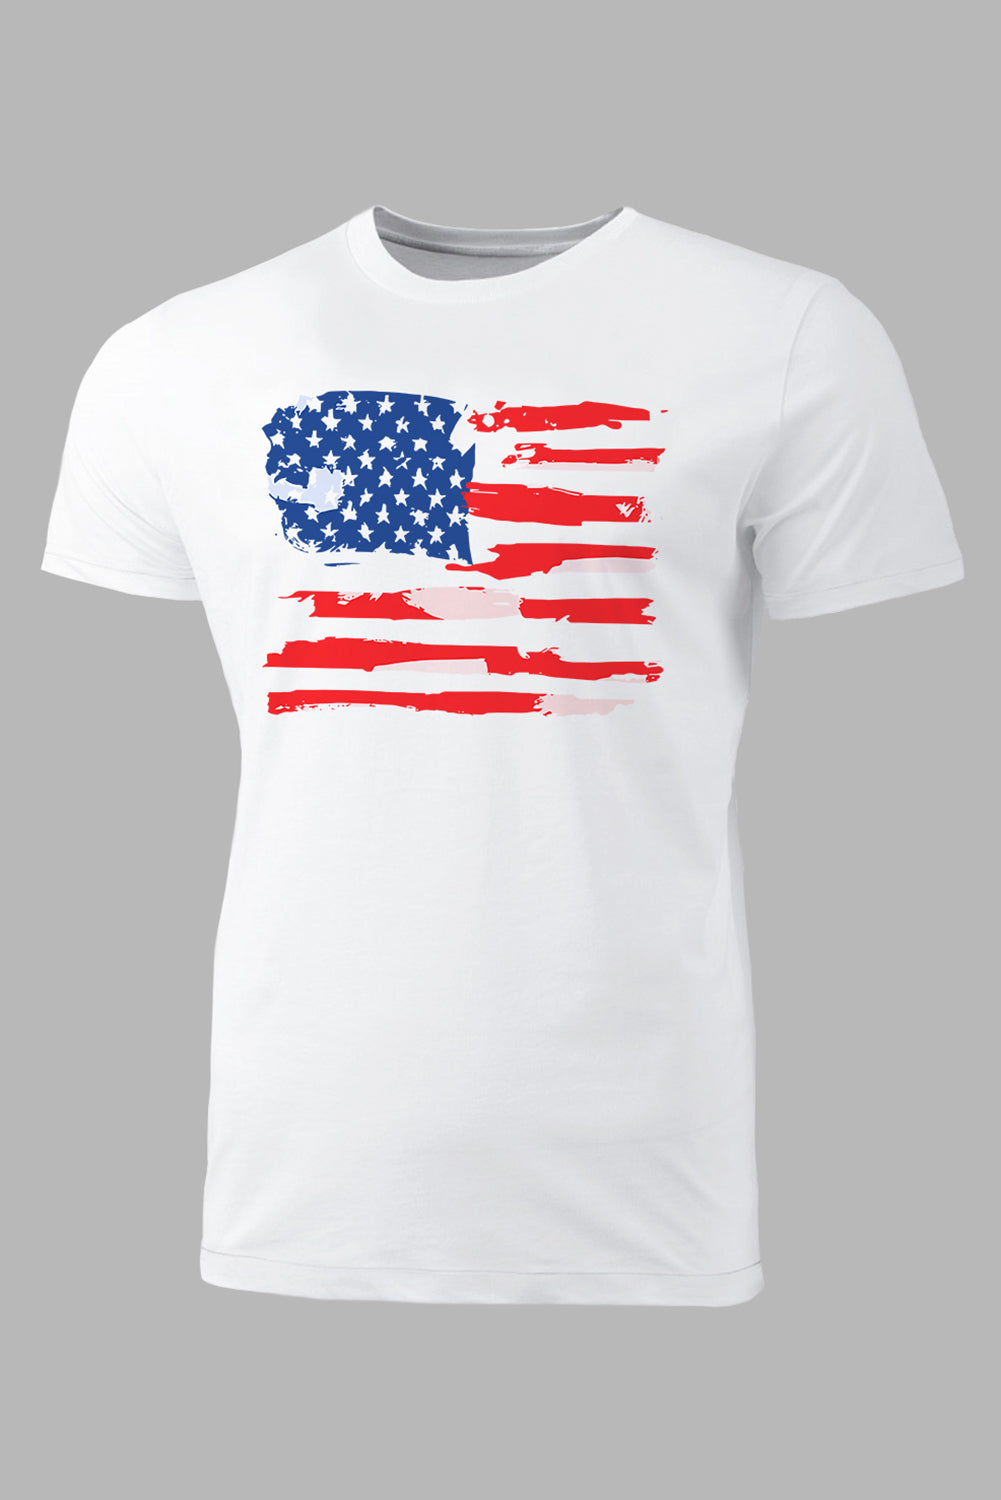 White Distressed American Flag Graphic Print Men's T Shirt White 62%Polyester+32%Cotton+6%Elastane Men's Tops JT's Designer Fashion